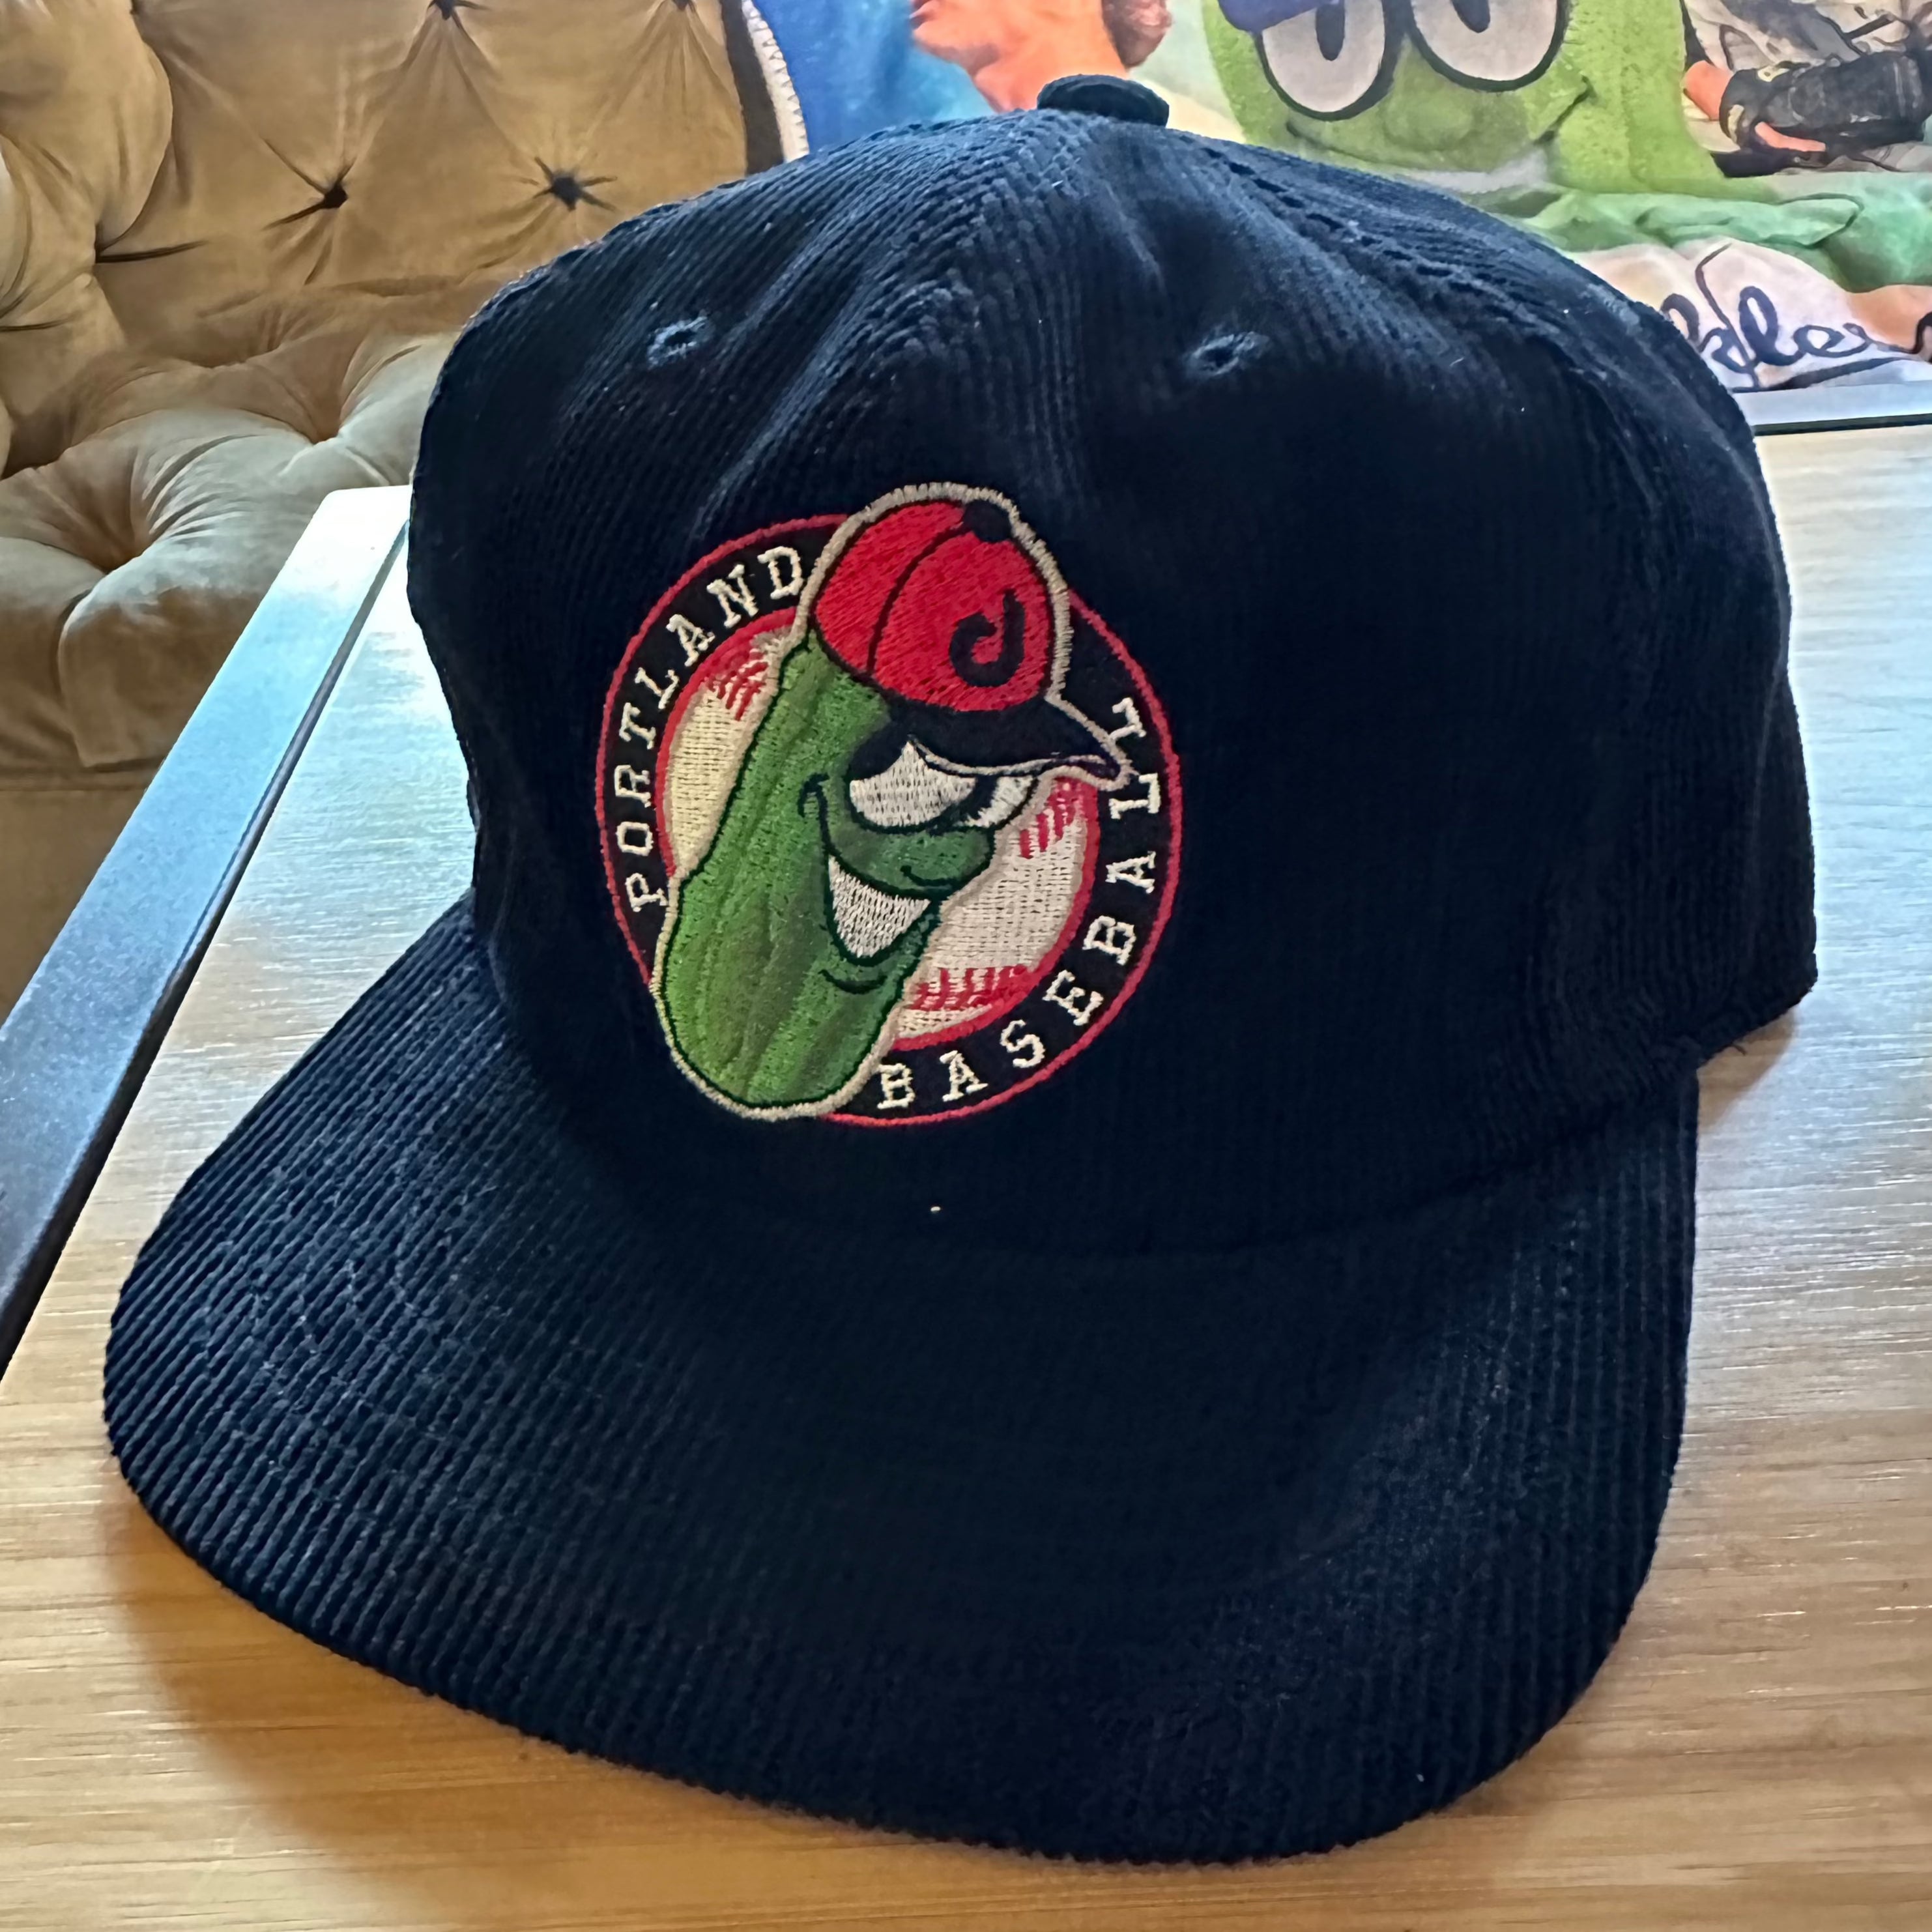 City | Rip Portland Official Hat Baseball League Corduroy Pickles